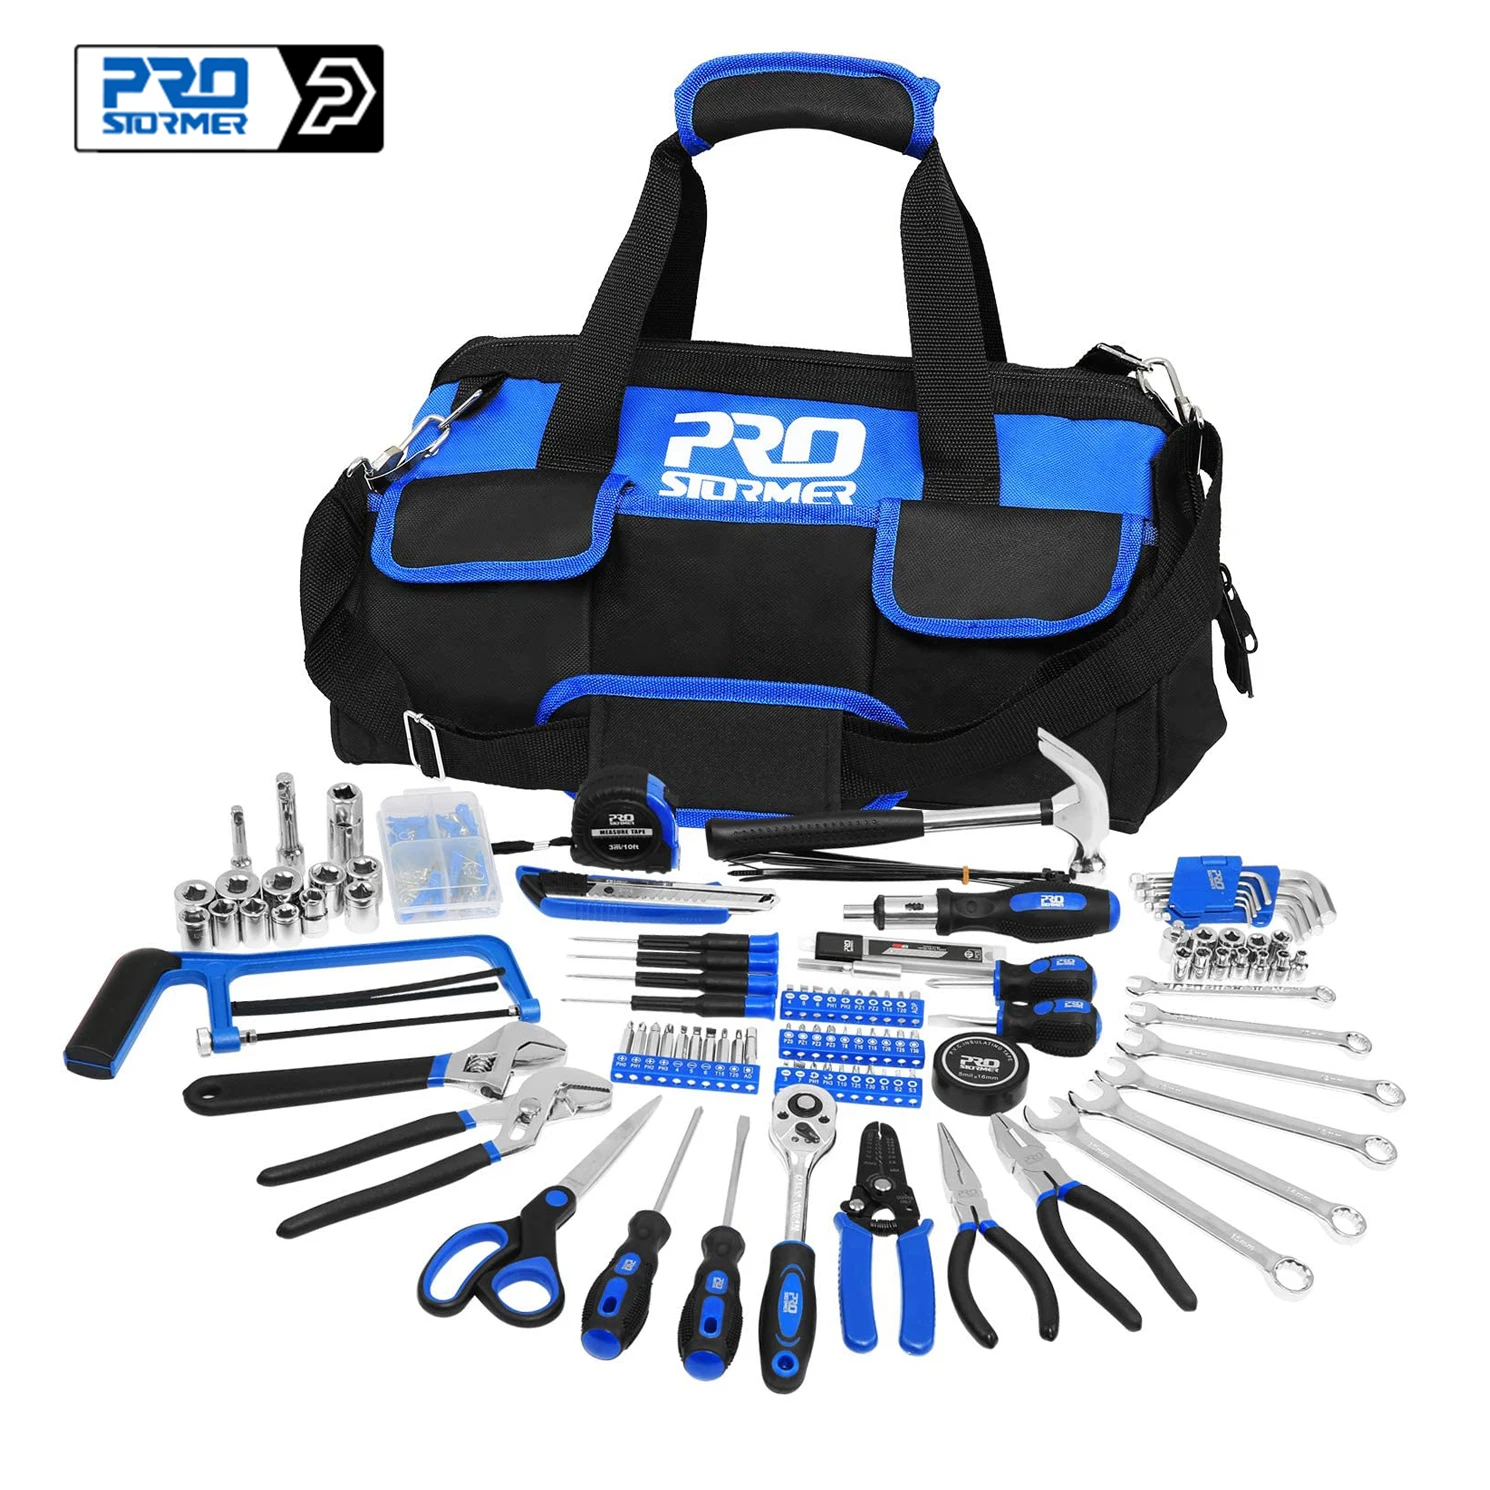 198 Pcs General Household Hand Tool Set PROSTORMER Multi-Purpose Basic Home Repair Tool Kit Easy Carrying Storage Bag PROSTORMER